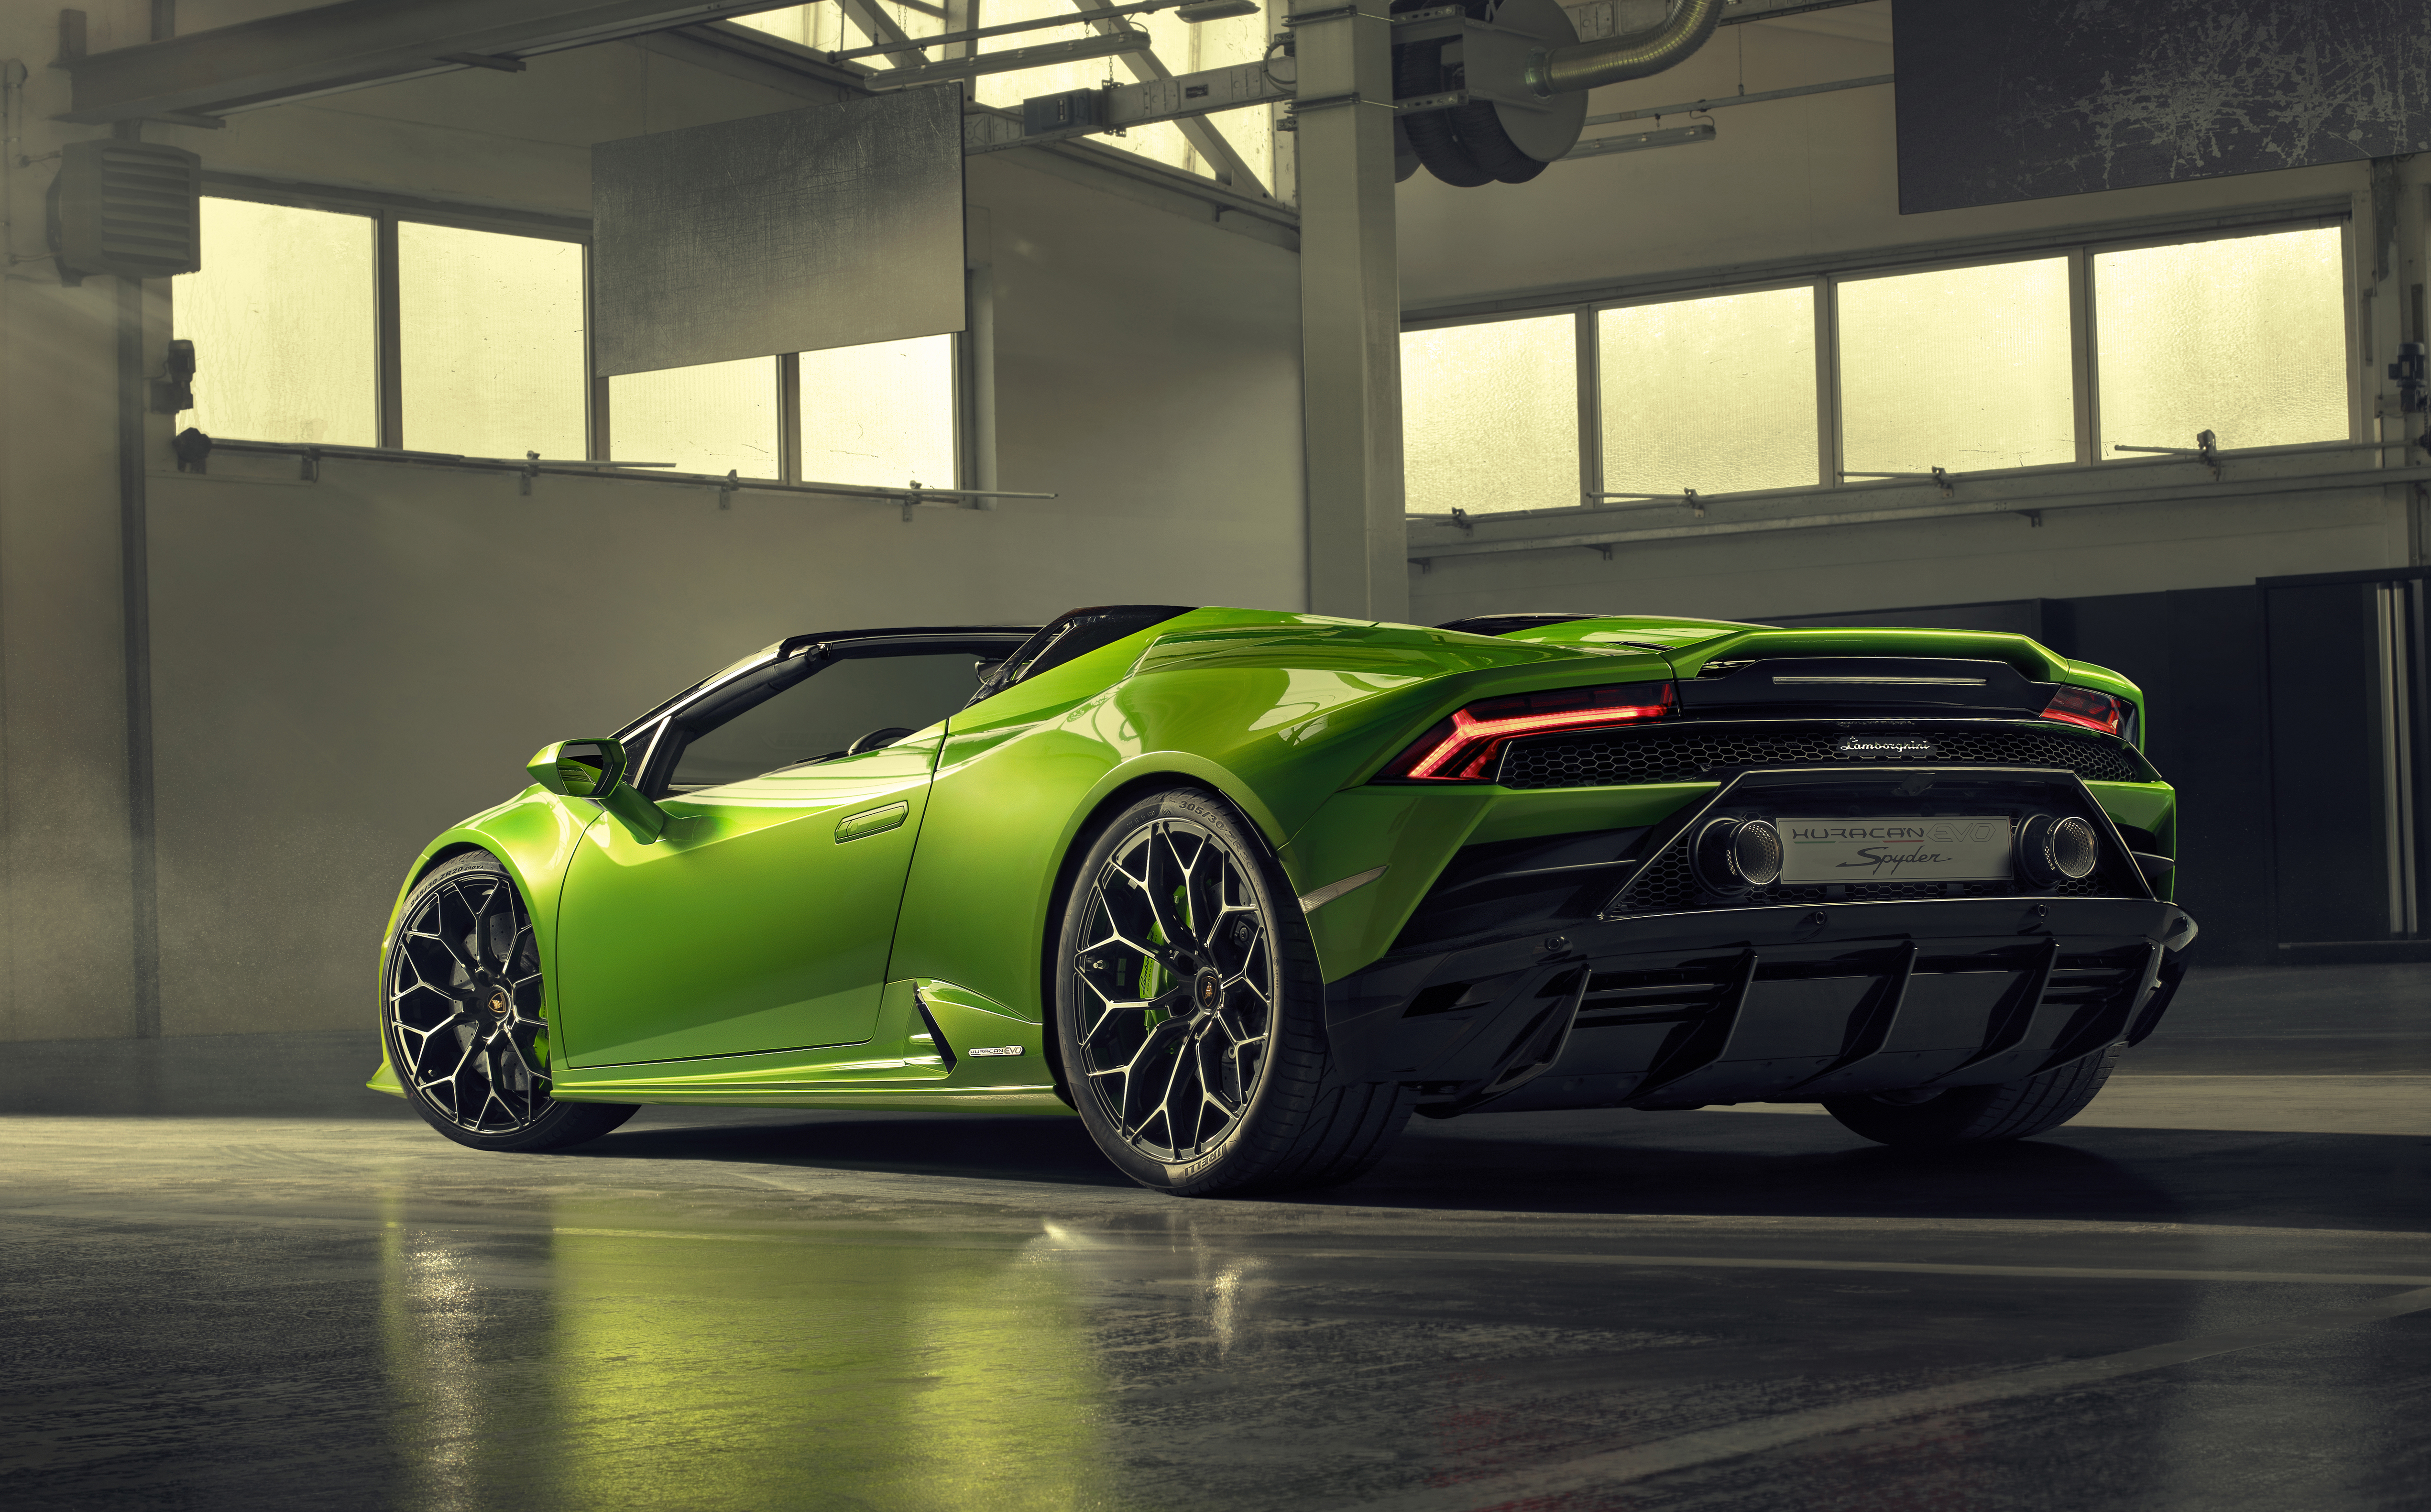 2019 Lamborghini Huracan Evo Spyder Rear View, HD Cars, 4k ...